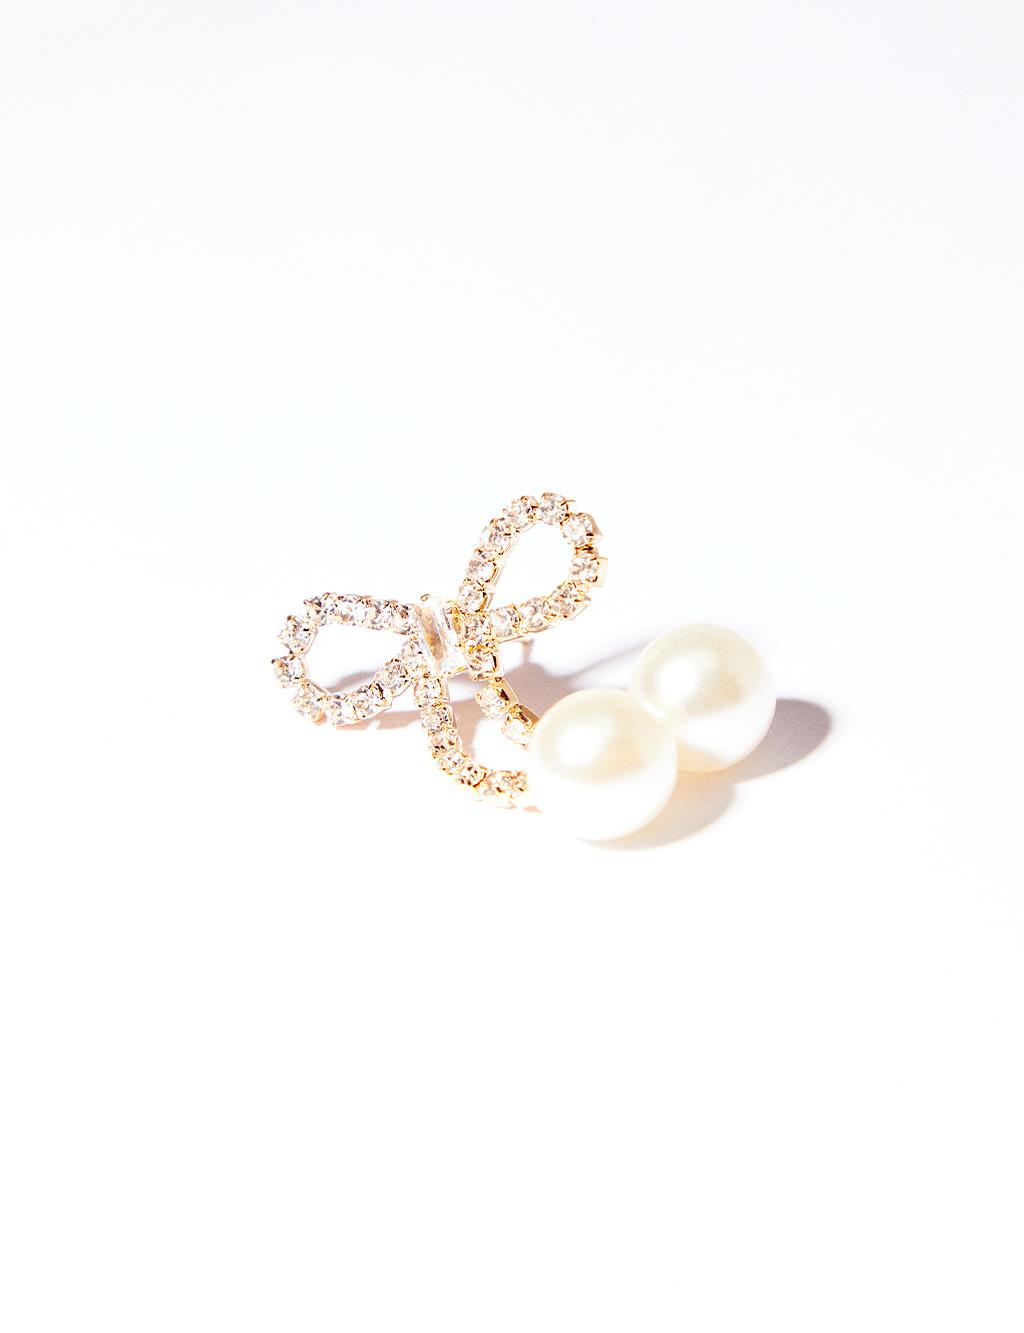 Pearl Bow Earrings Gold